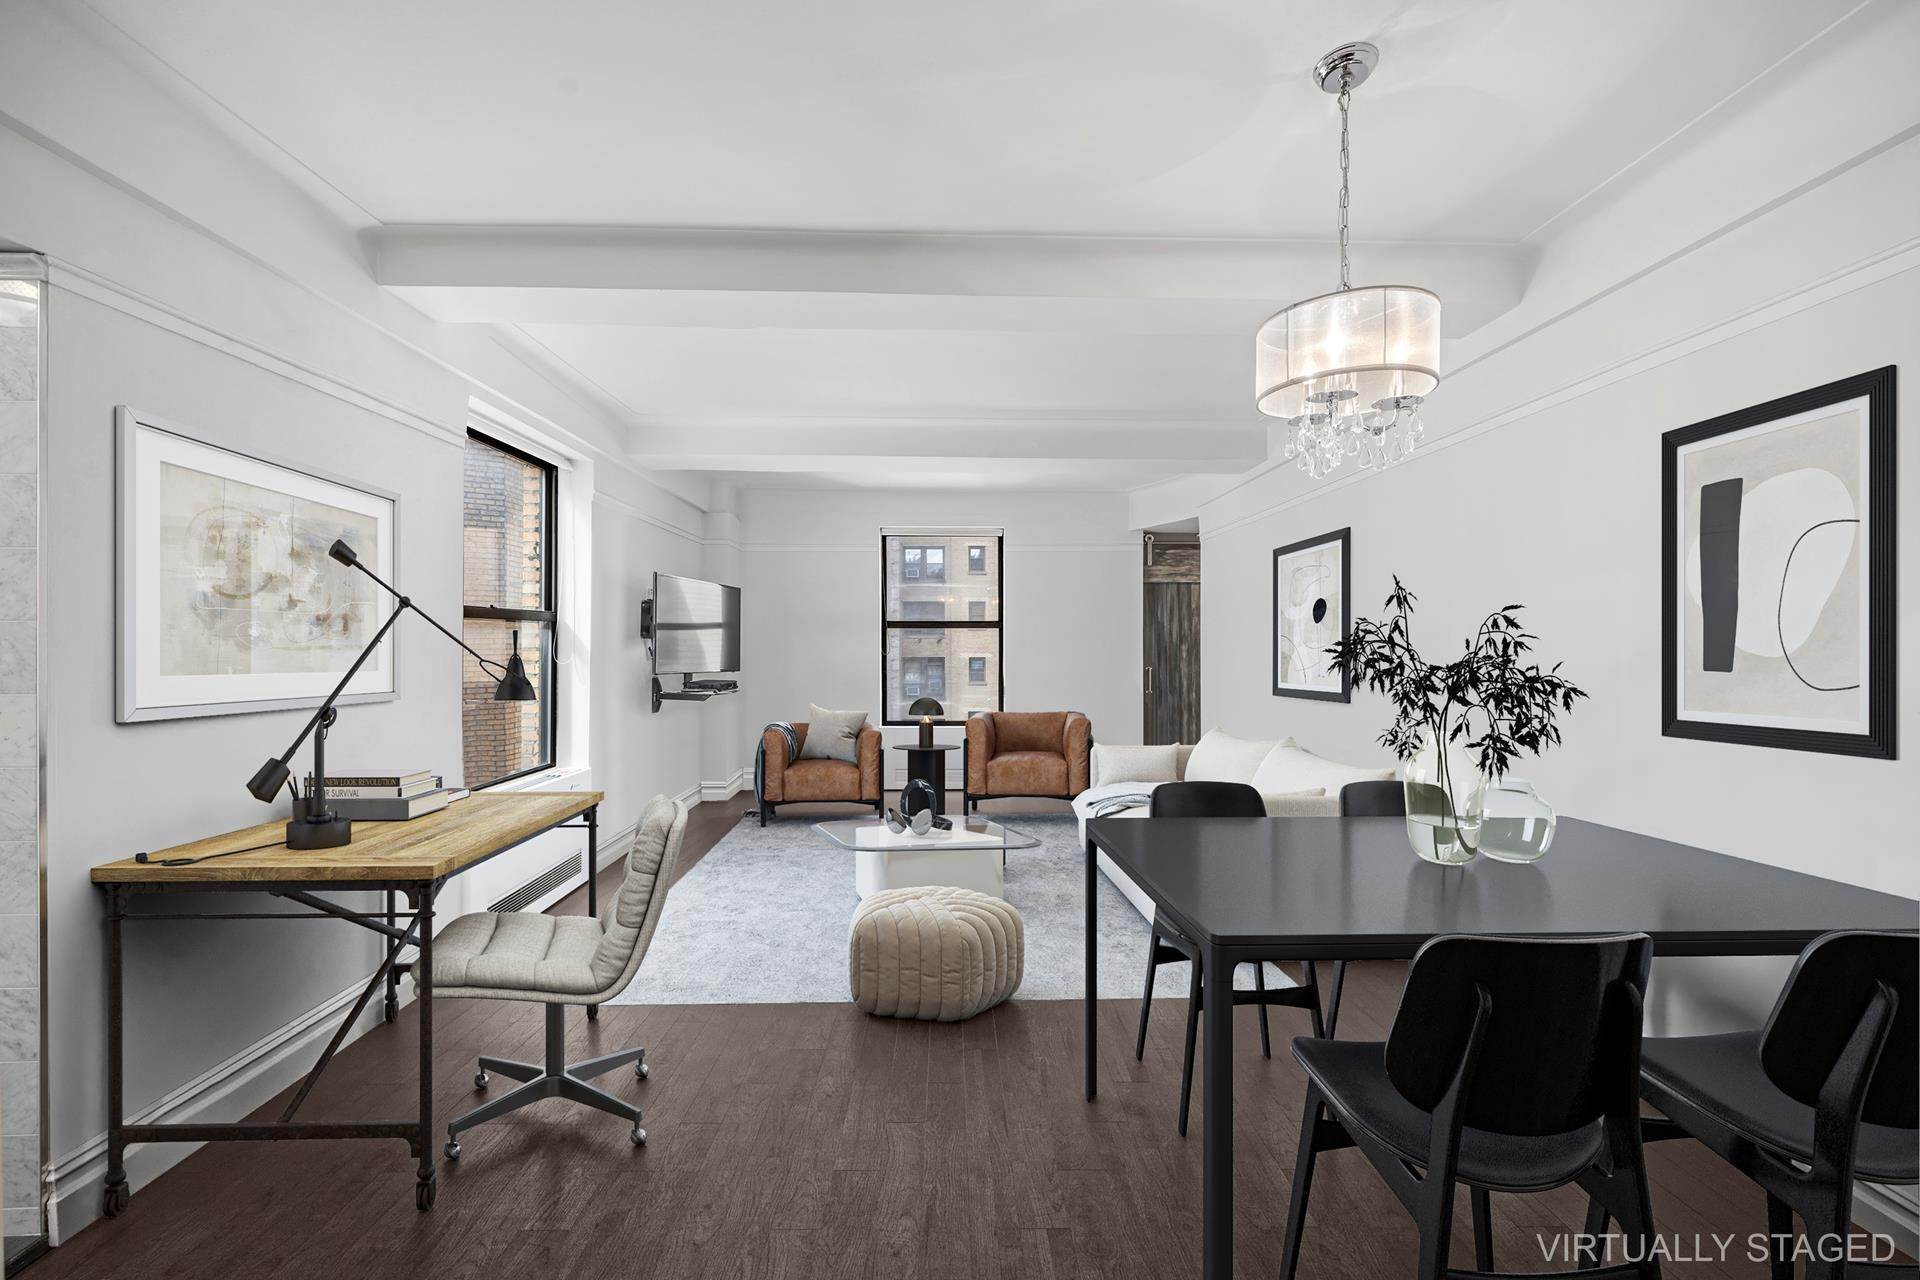 Condominium at Carnegie Hill, Manhattan, NY 10128